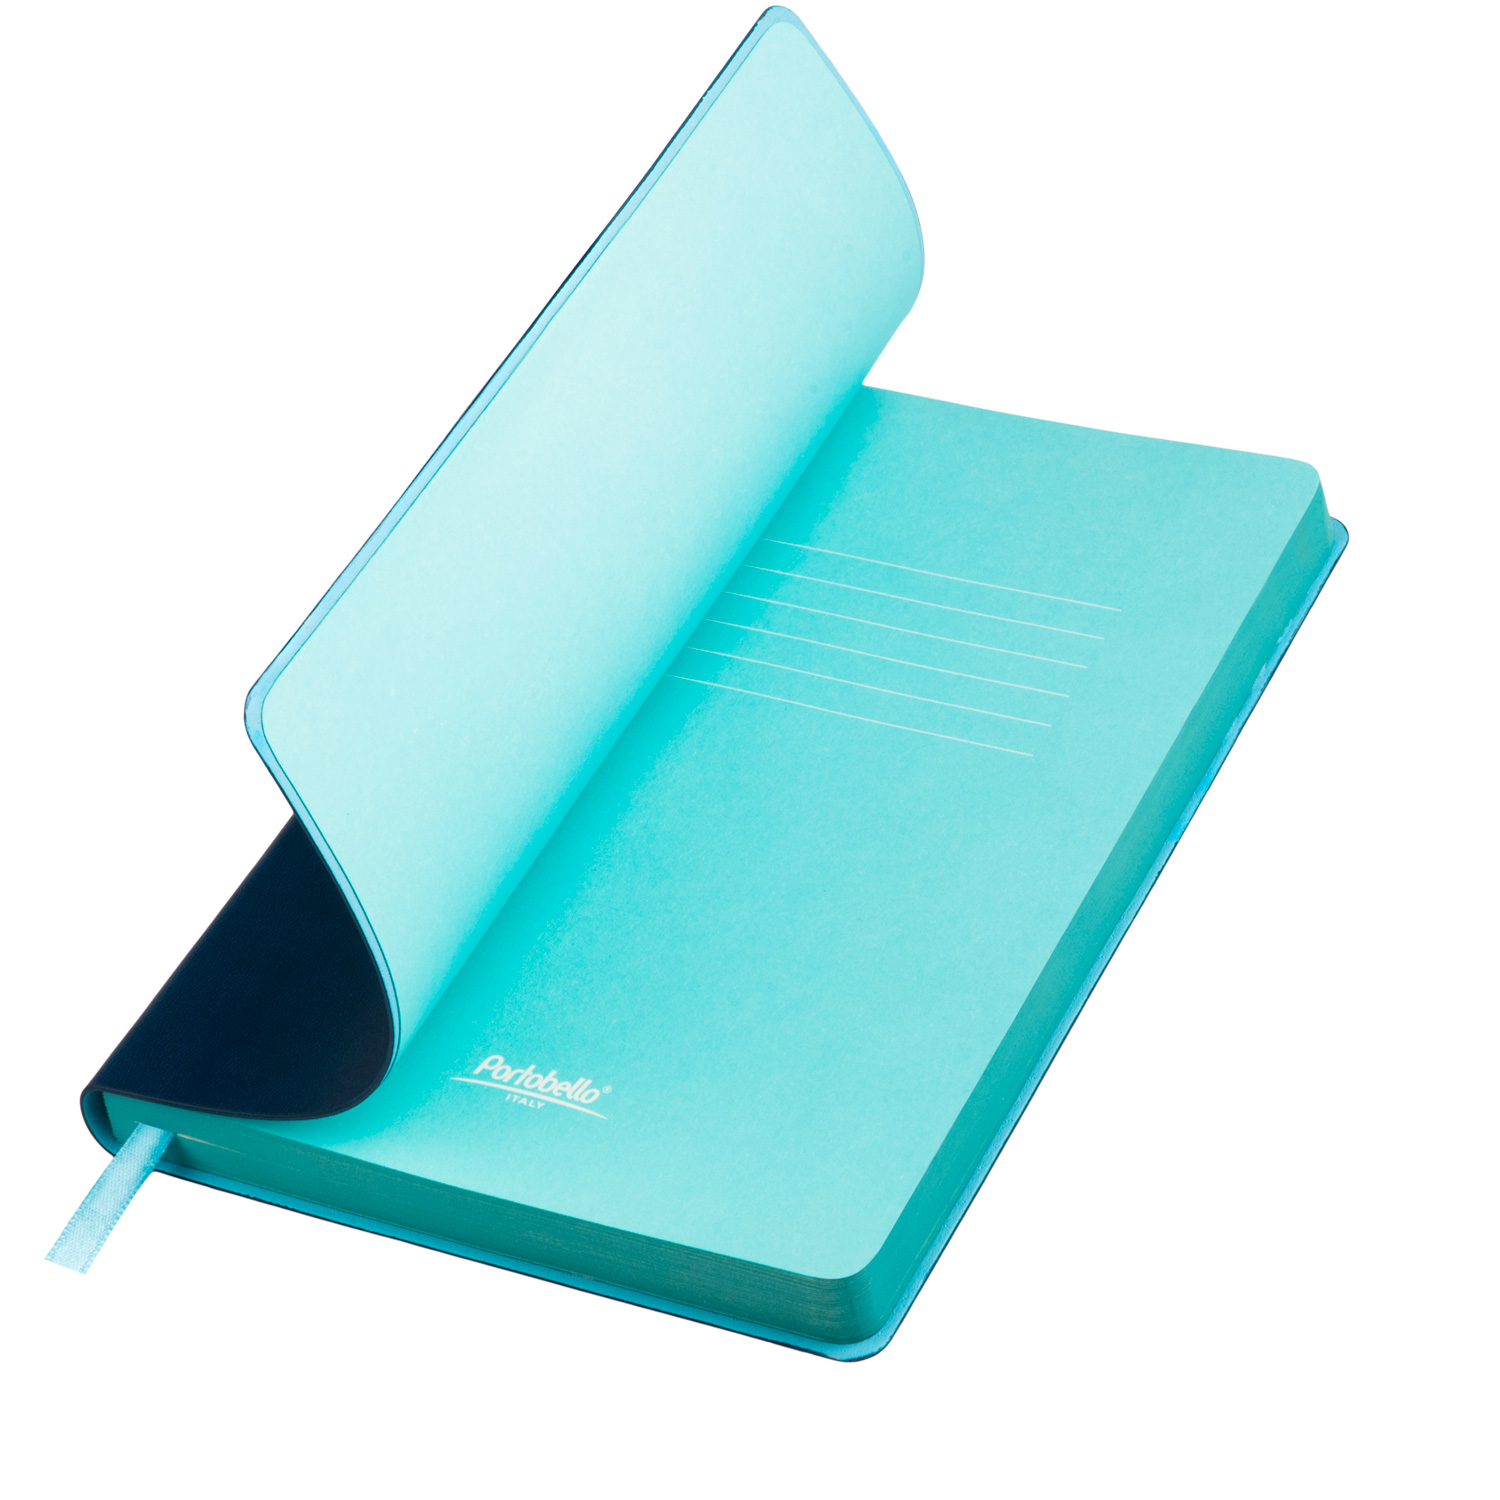 Артикул: A15254.030 — Ежедневник Portobello Trend, Latte NEW, недатированный, синий/голубой